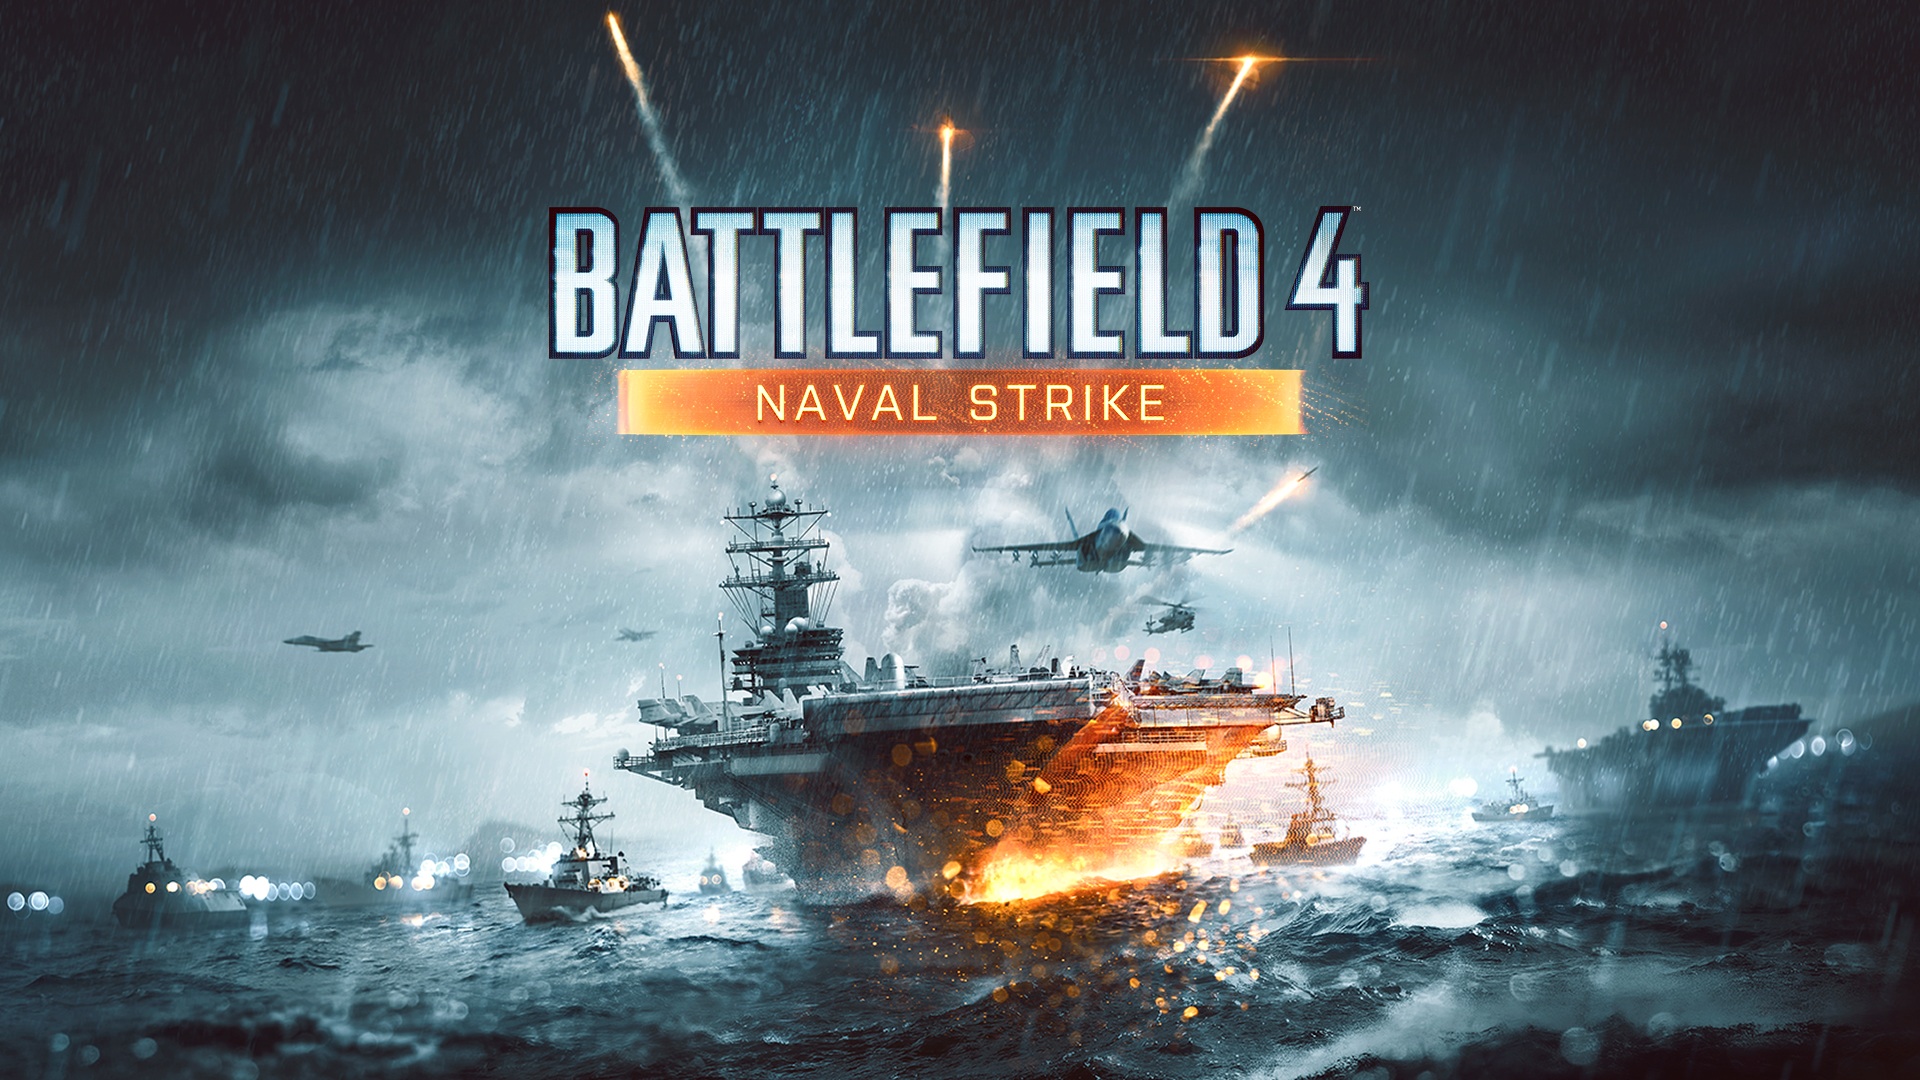 Battlefield 4 Naval Strike Wallpapers HD Wallpapers 1920x1080